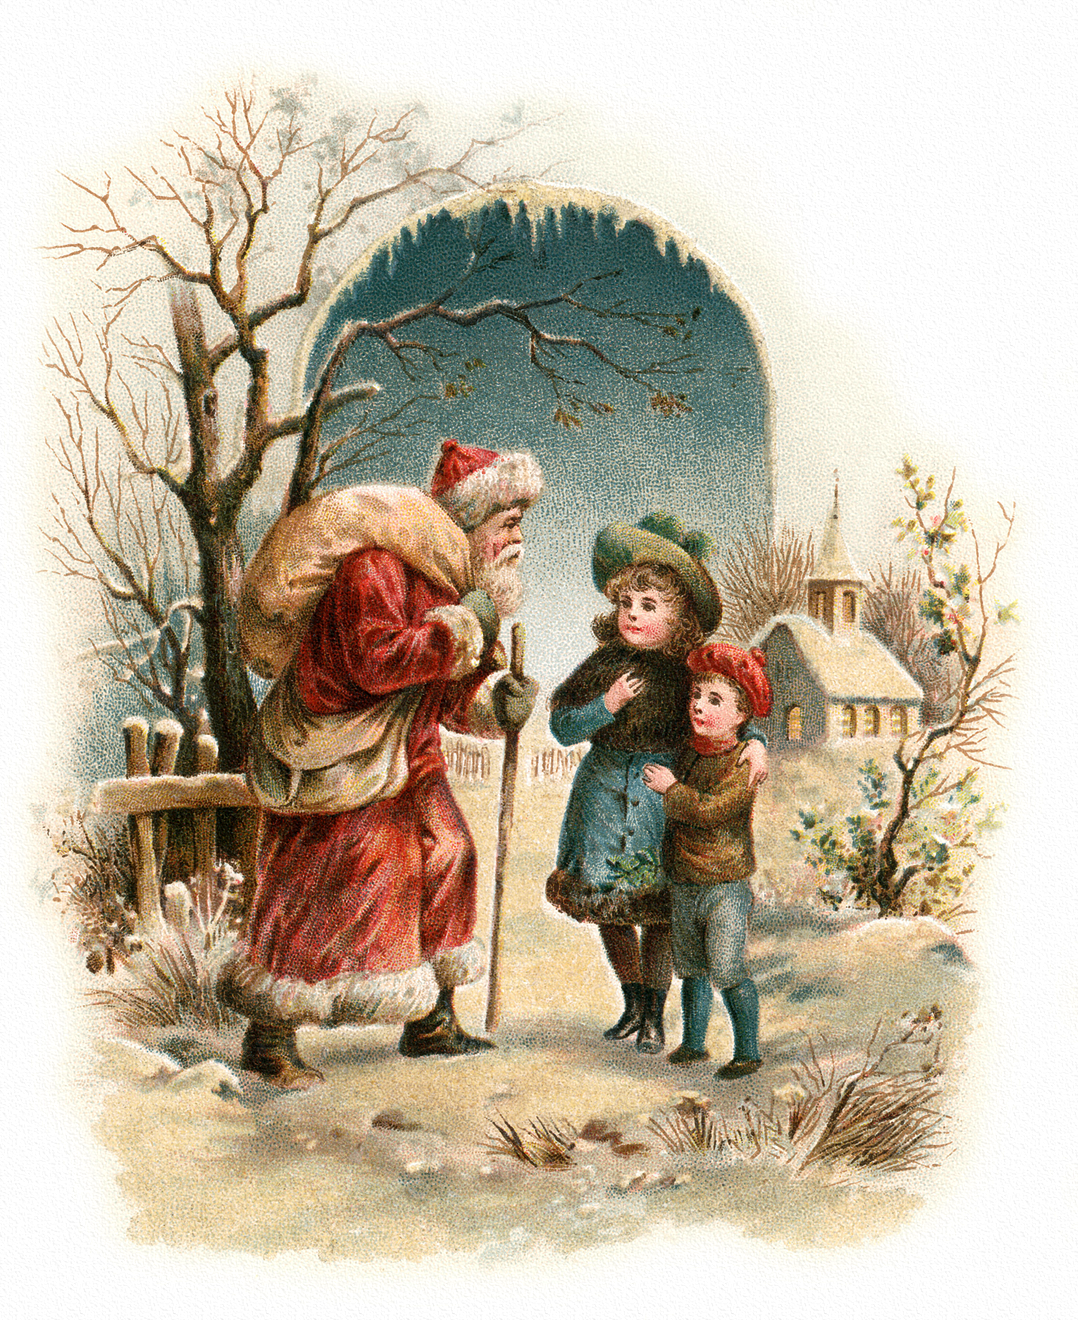 More Retro Santa Claus art – The Long Goodbye